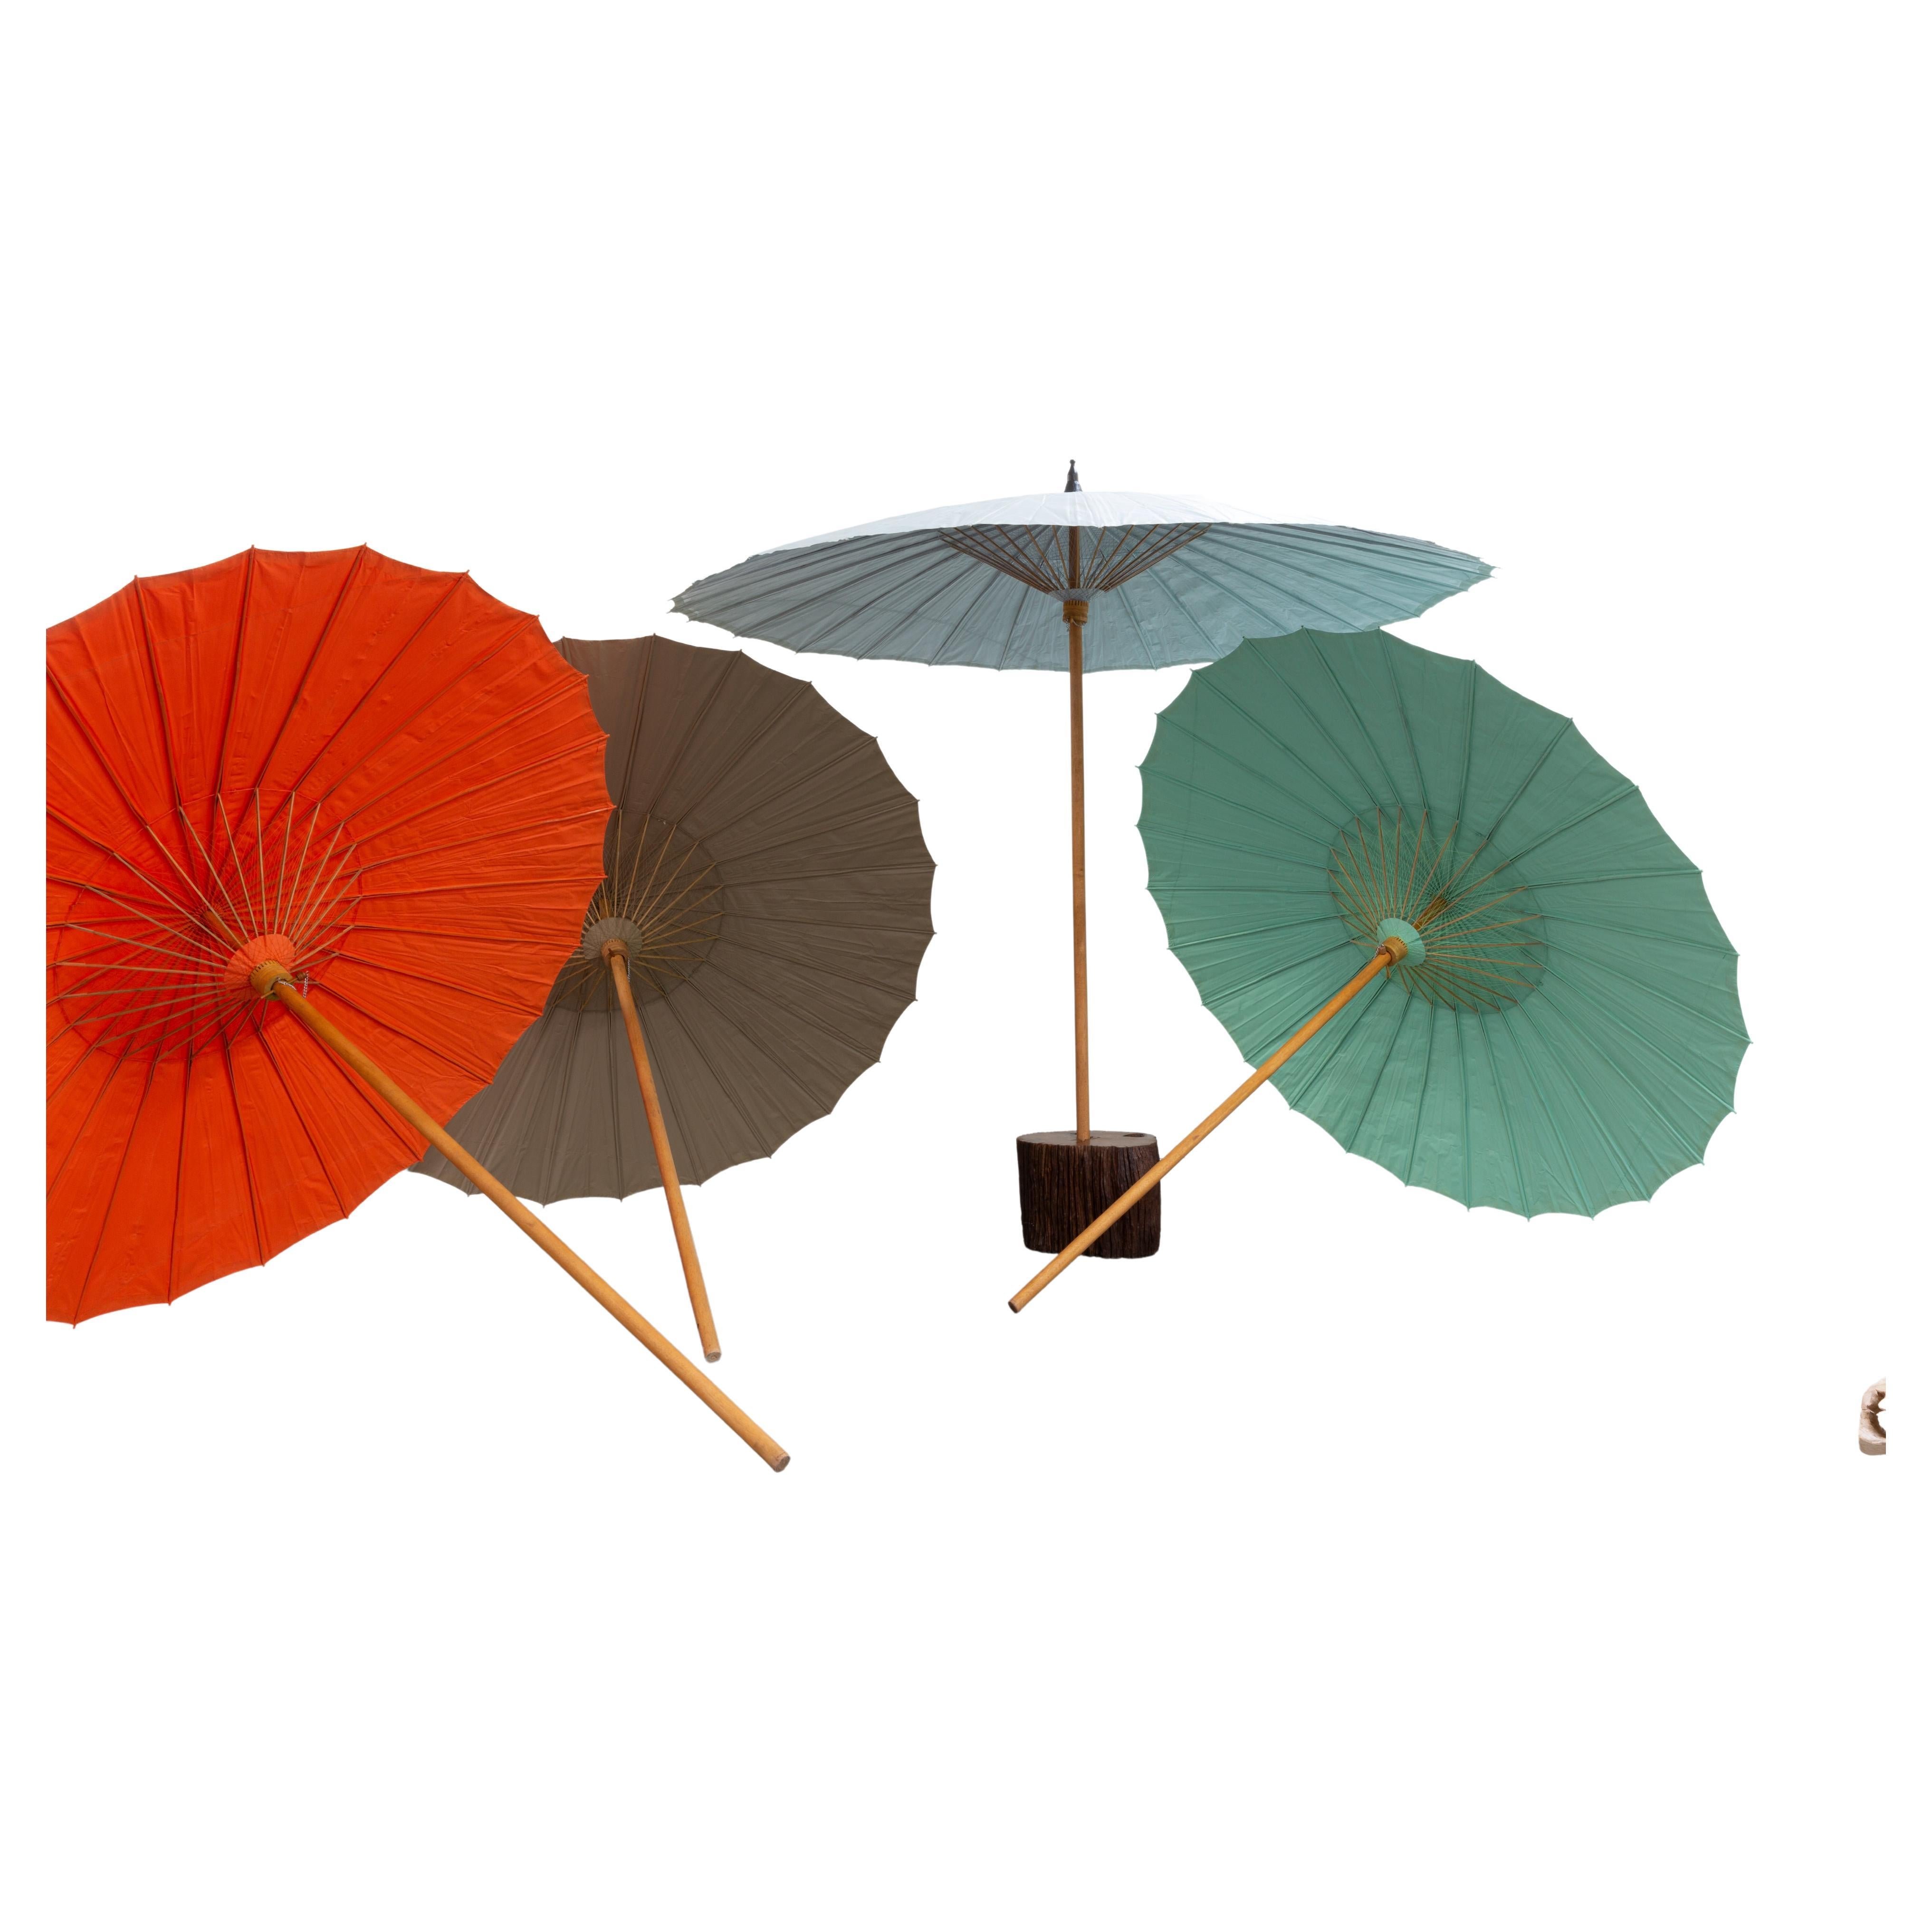 Amapola Umbrellas by CEU Studio, Represented by Tuleste Factory For Sale